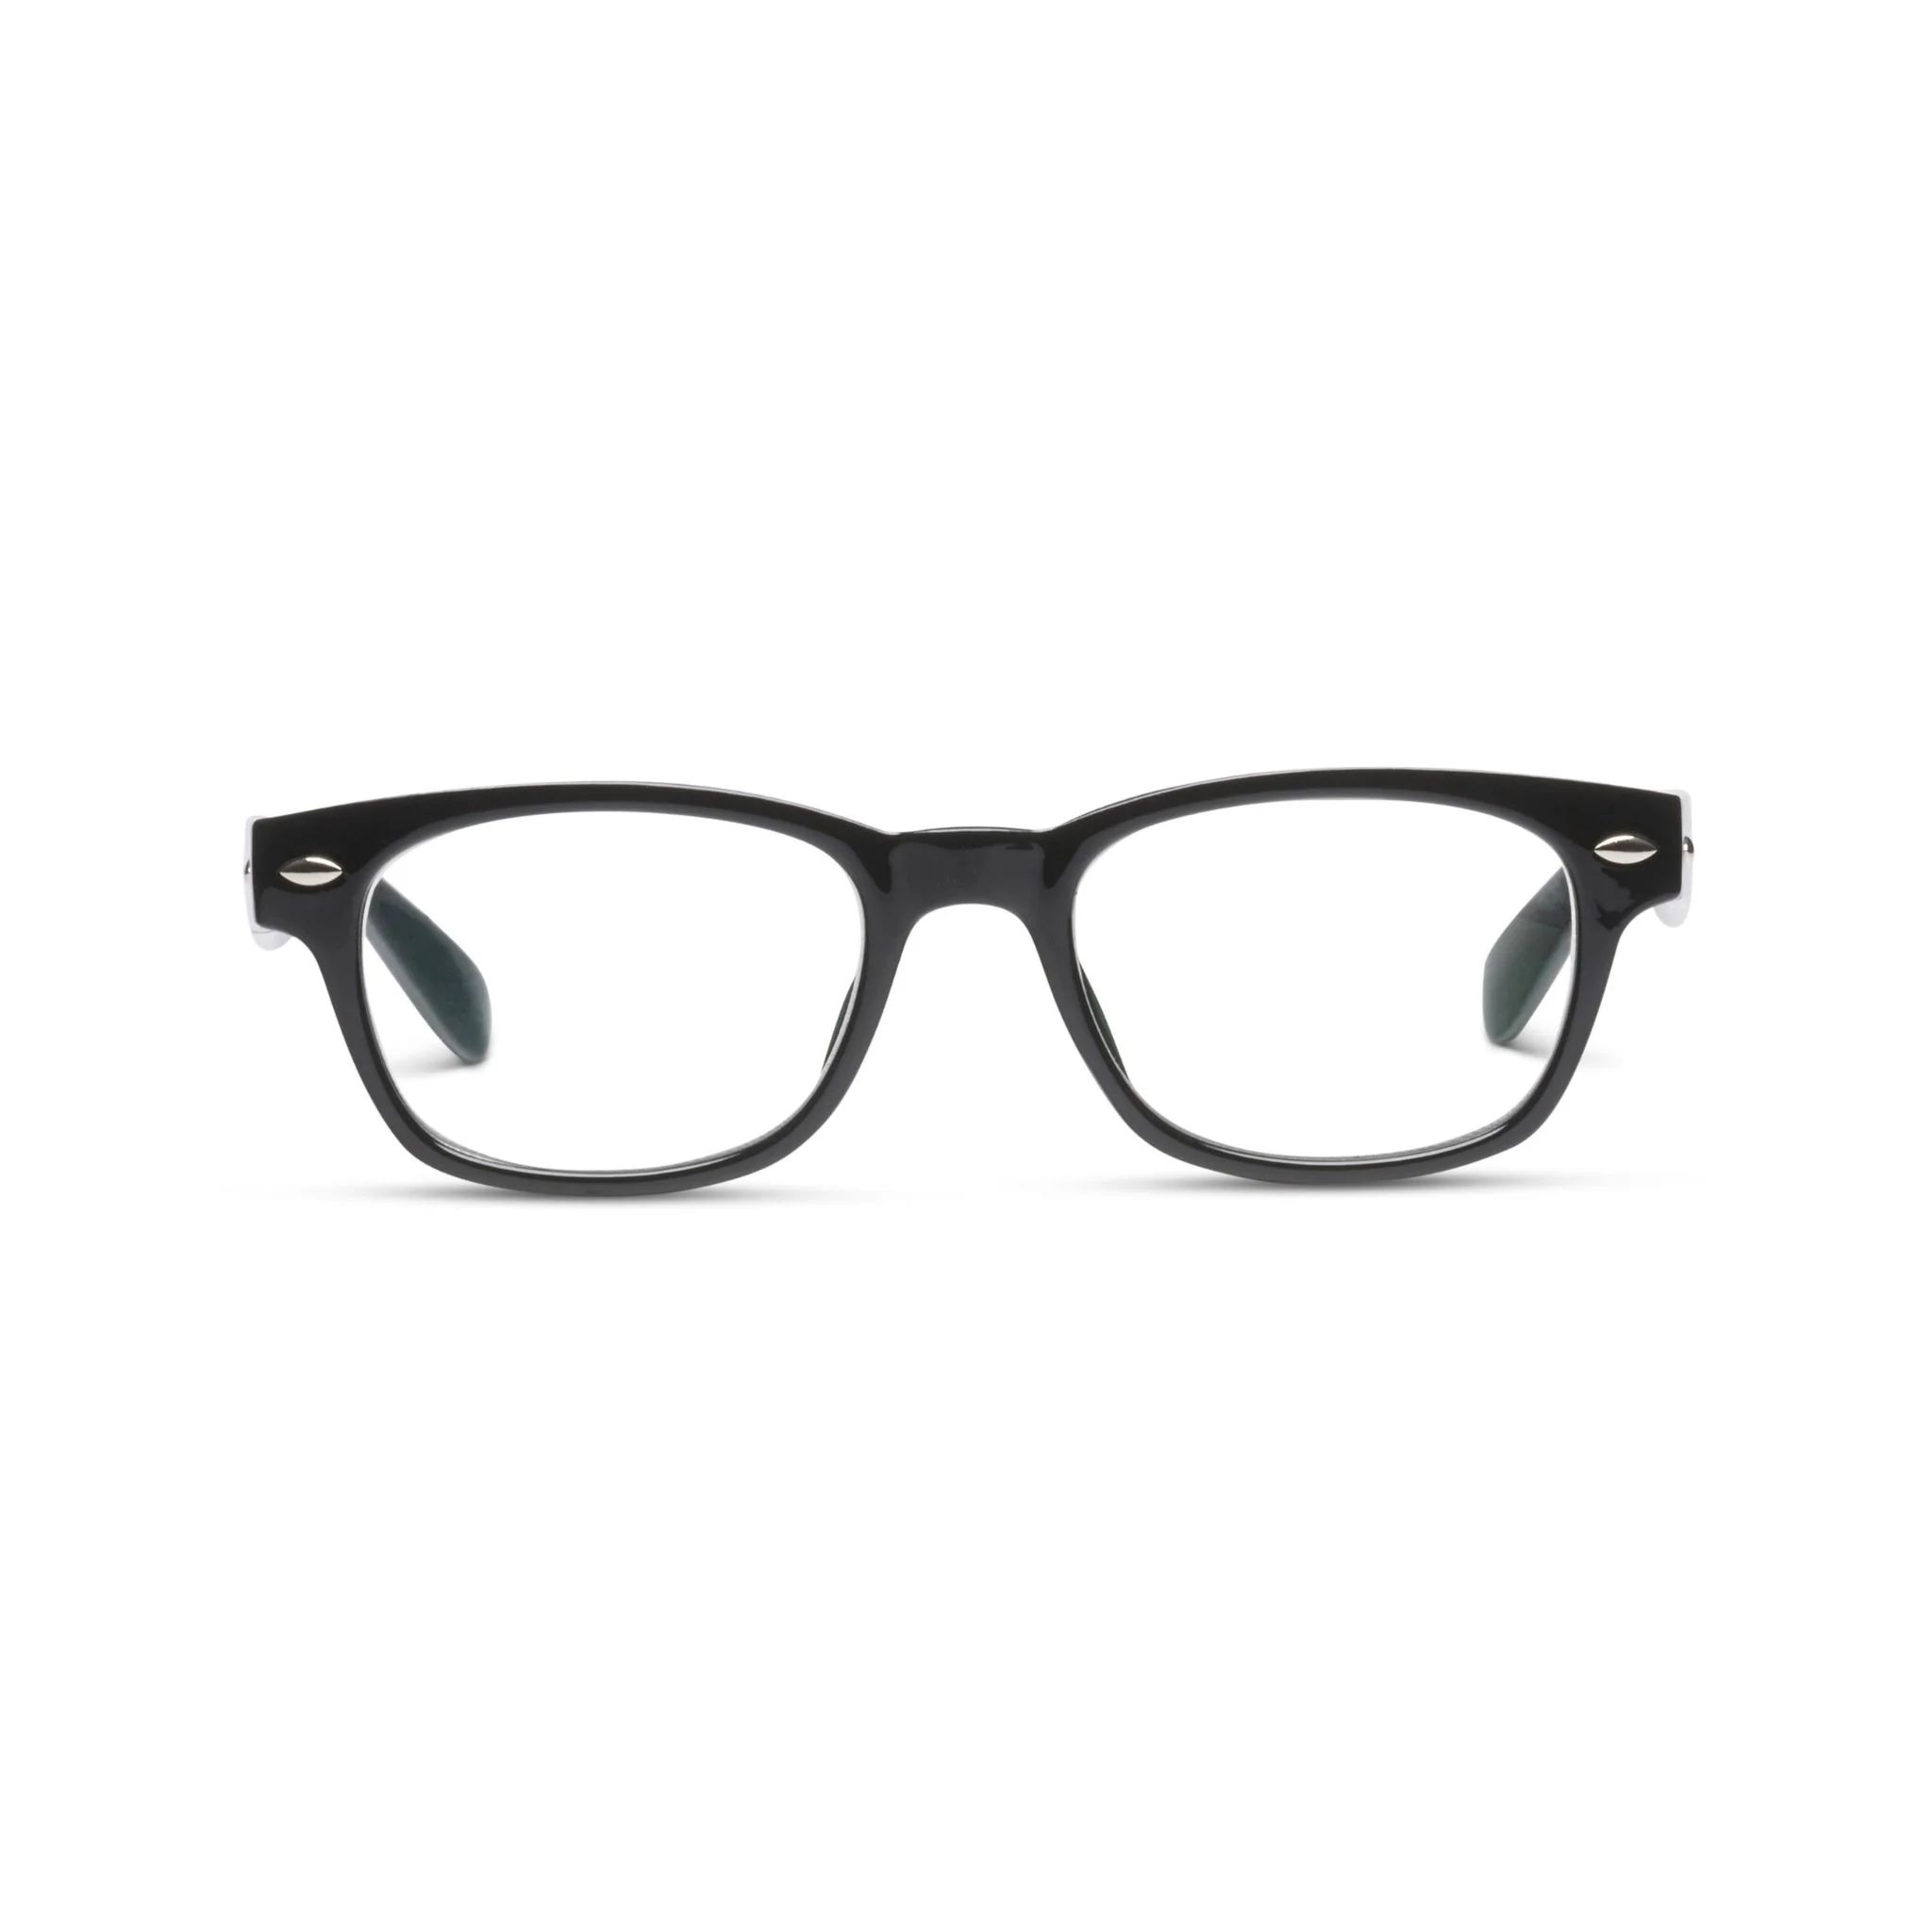 Clark | Blue Light Reading Glasses from Peepers - Black / Reading / 1.25 - Peepers by PeeperSpecs | Peepers